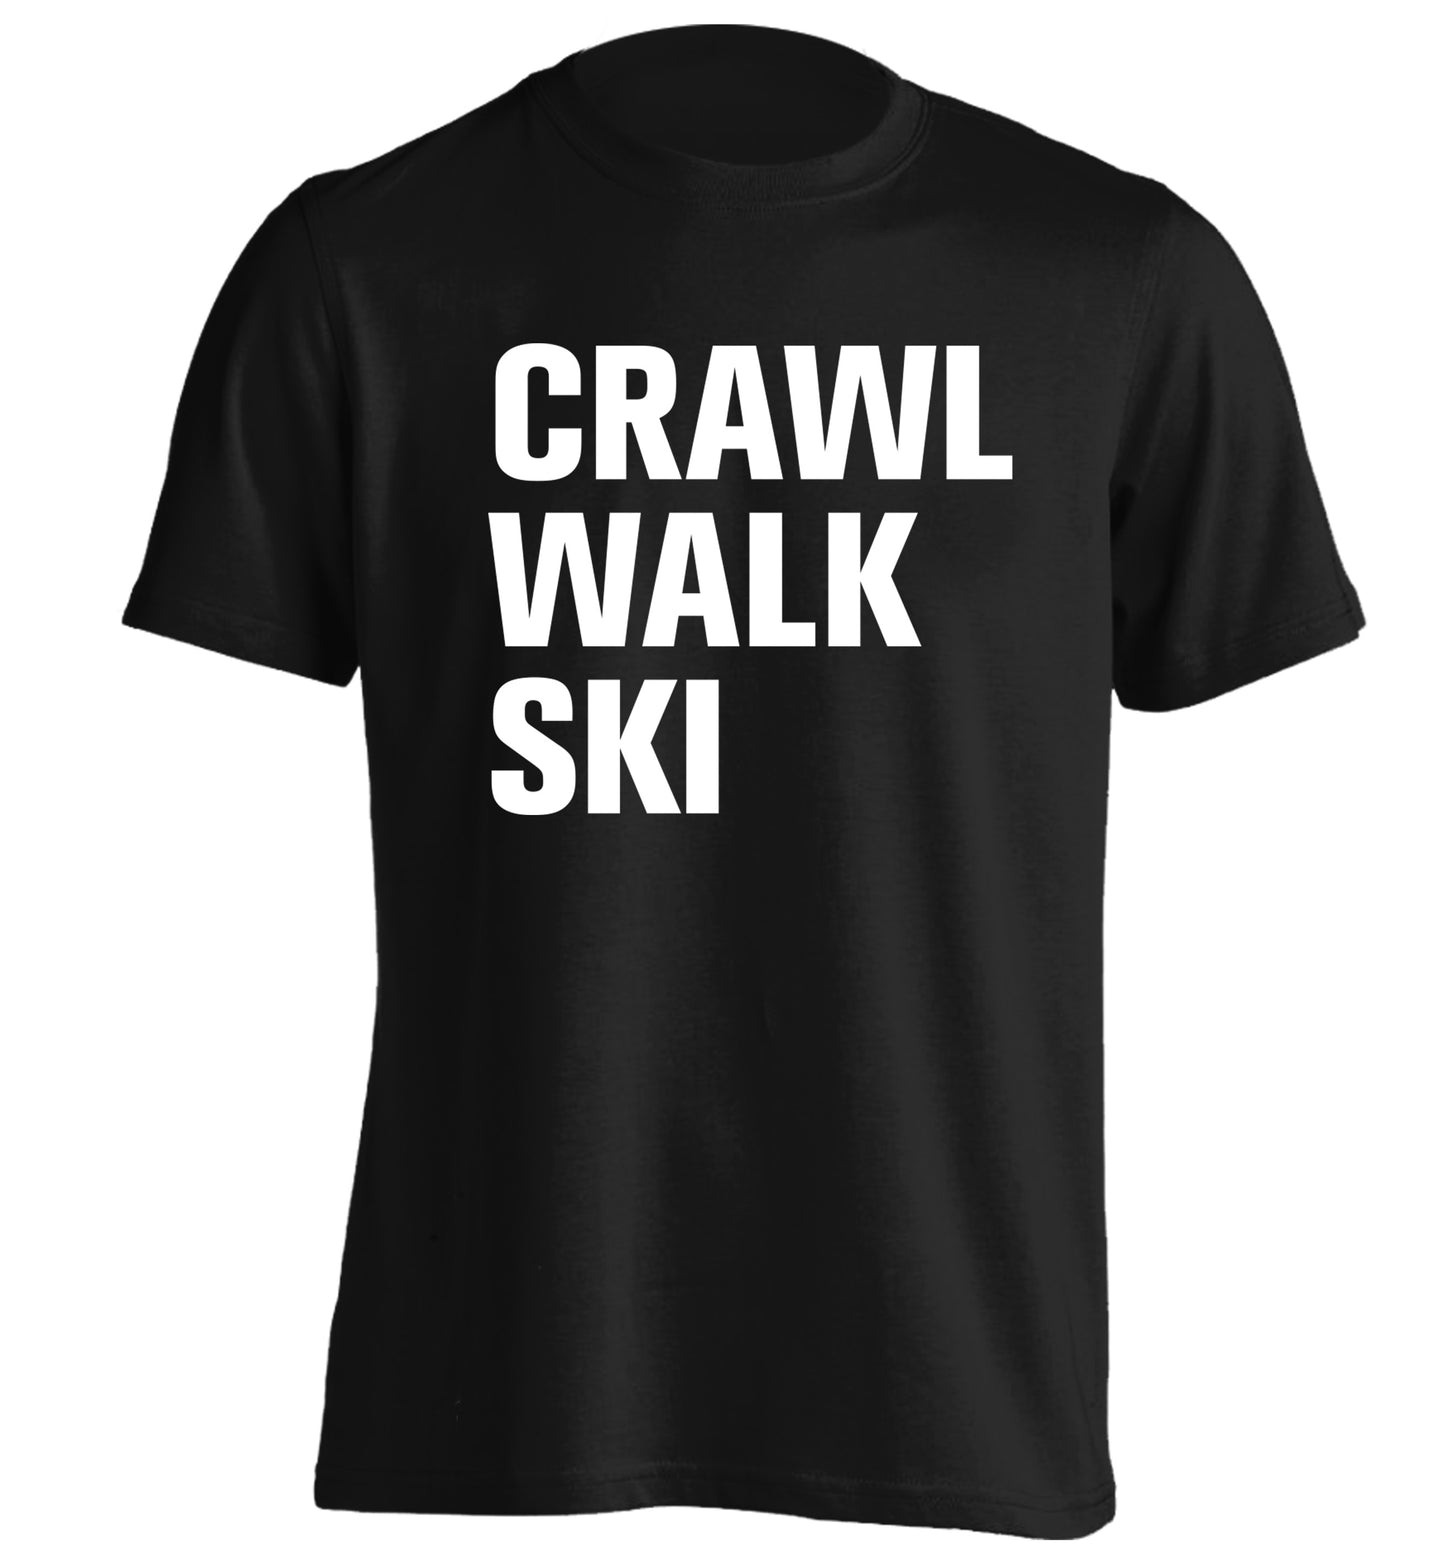 Crawl walk ski adults unisexblack Tshirt 2XL